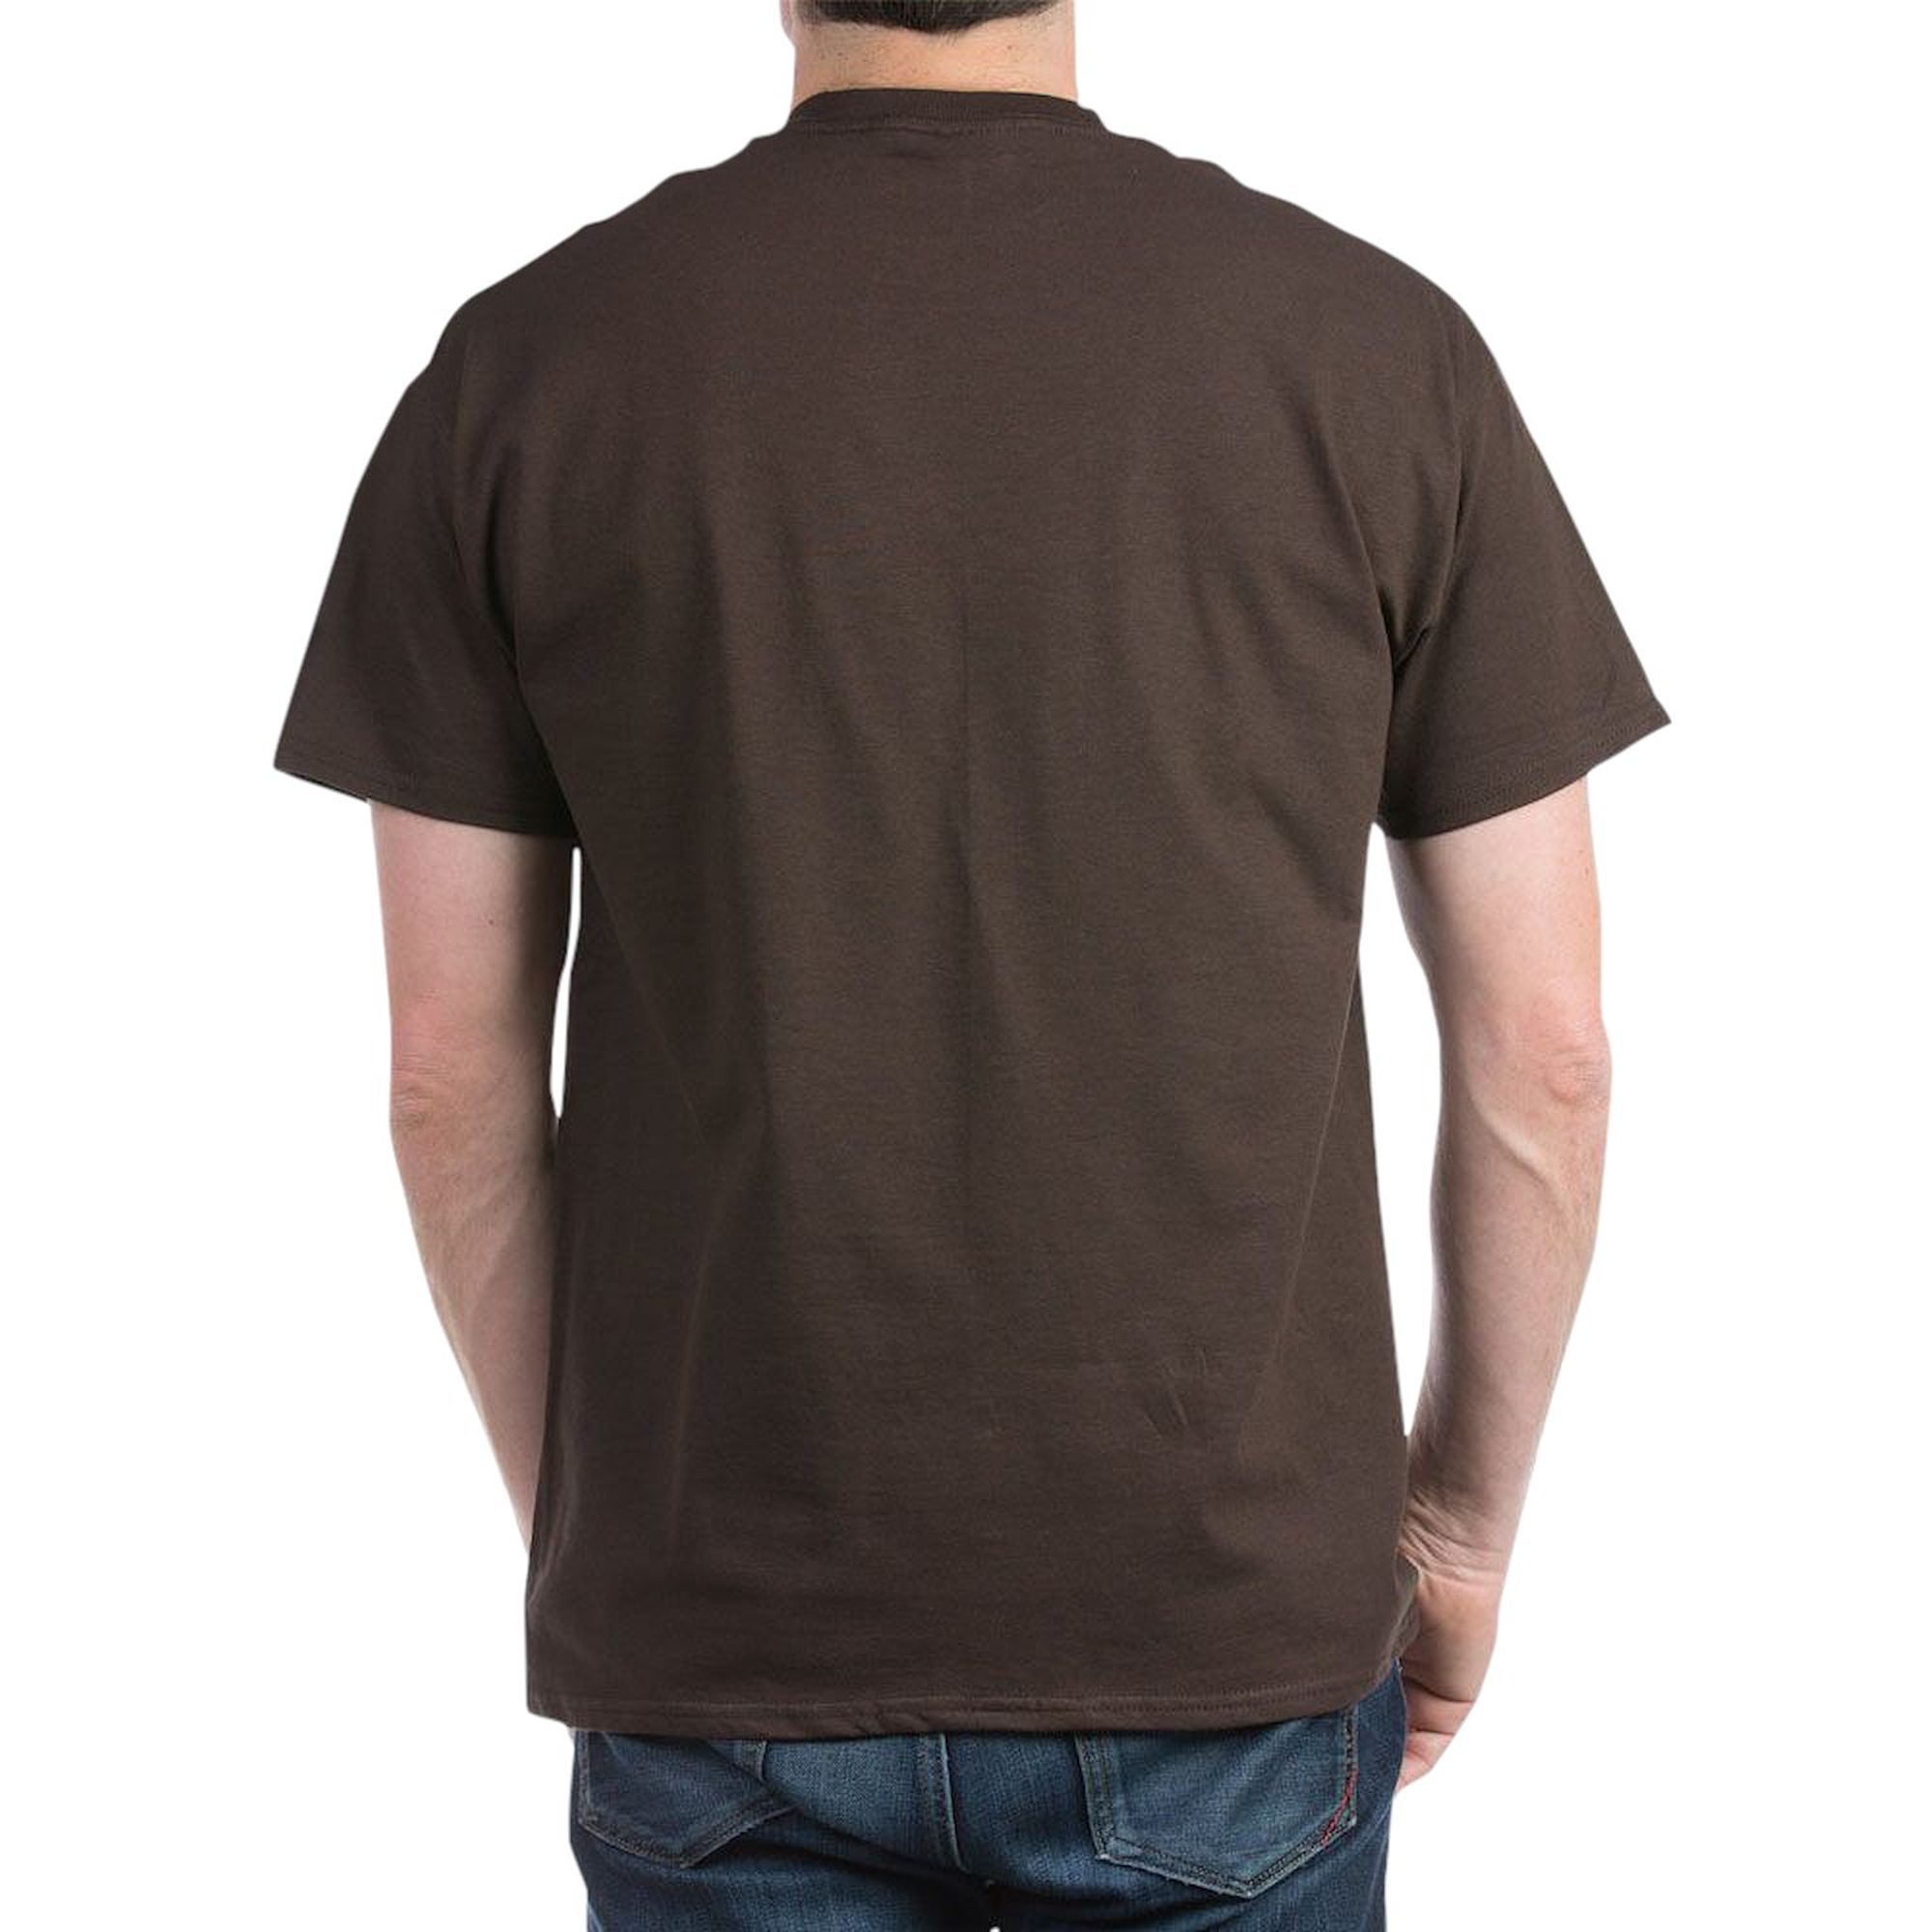 CafePress - Same Shirt Different Day Dark T Shirt - 100% Cotton T-Shirt - image 2 of 4